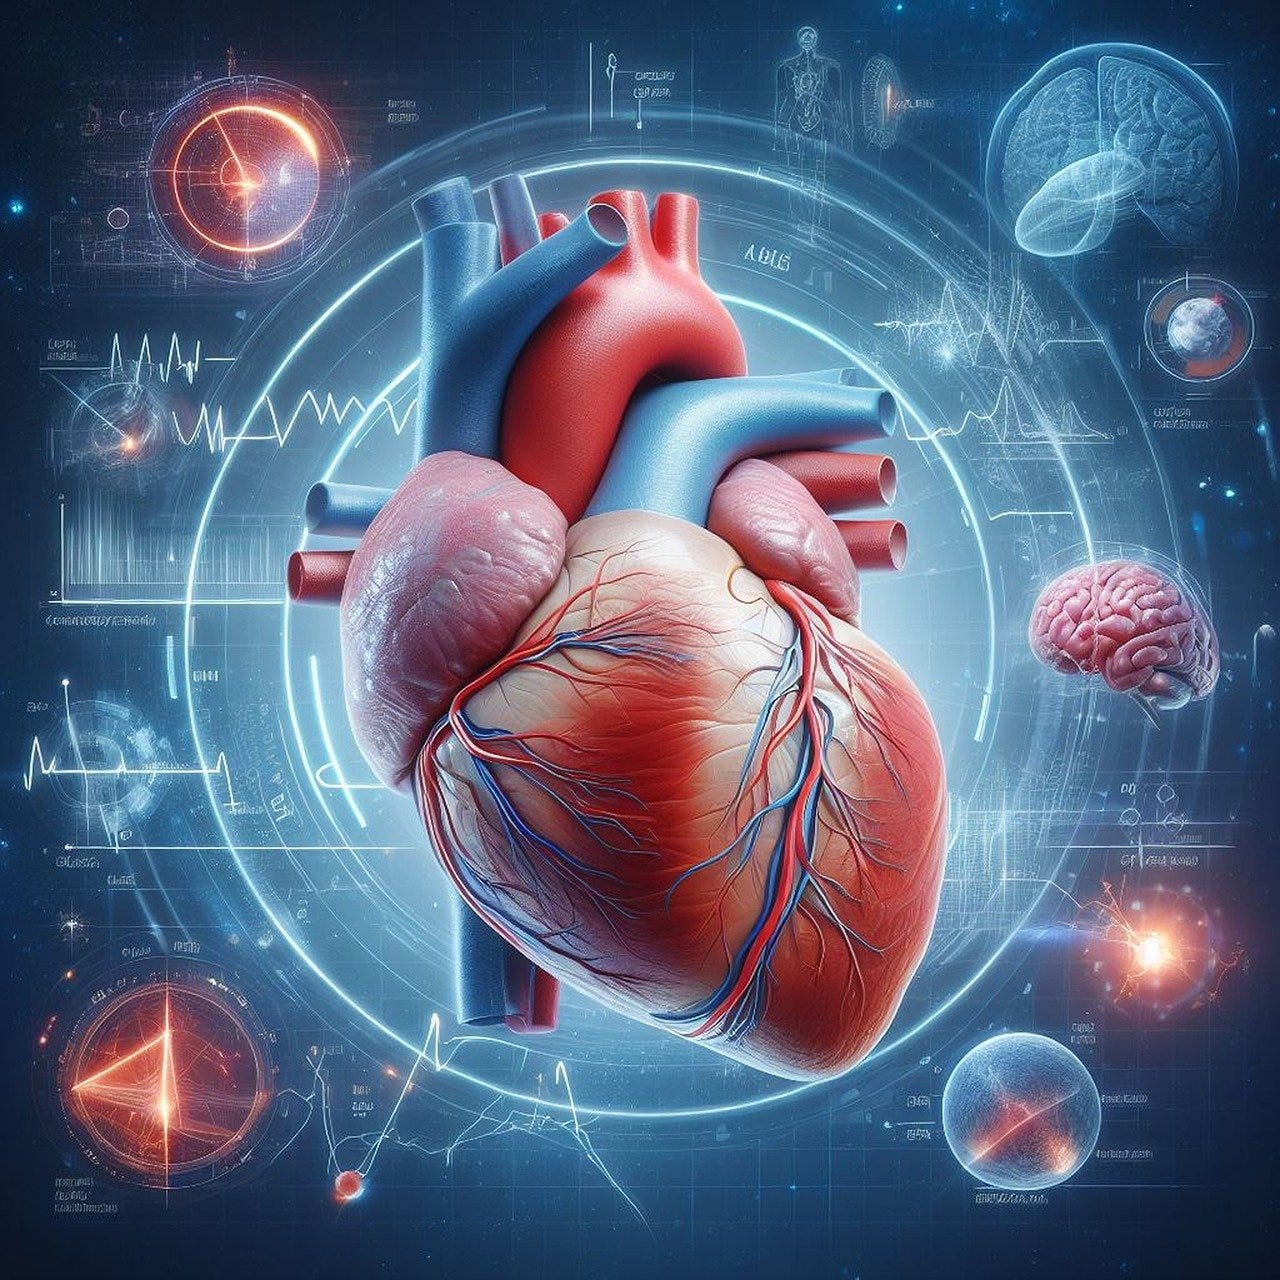 cardiovascular disease predicted by AI